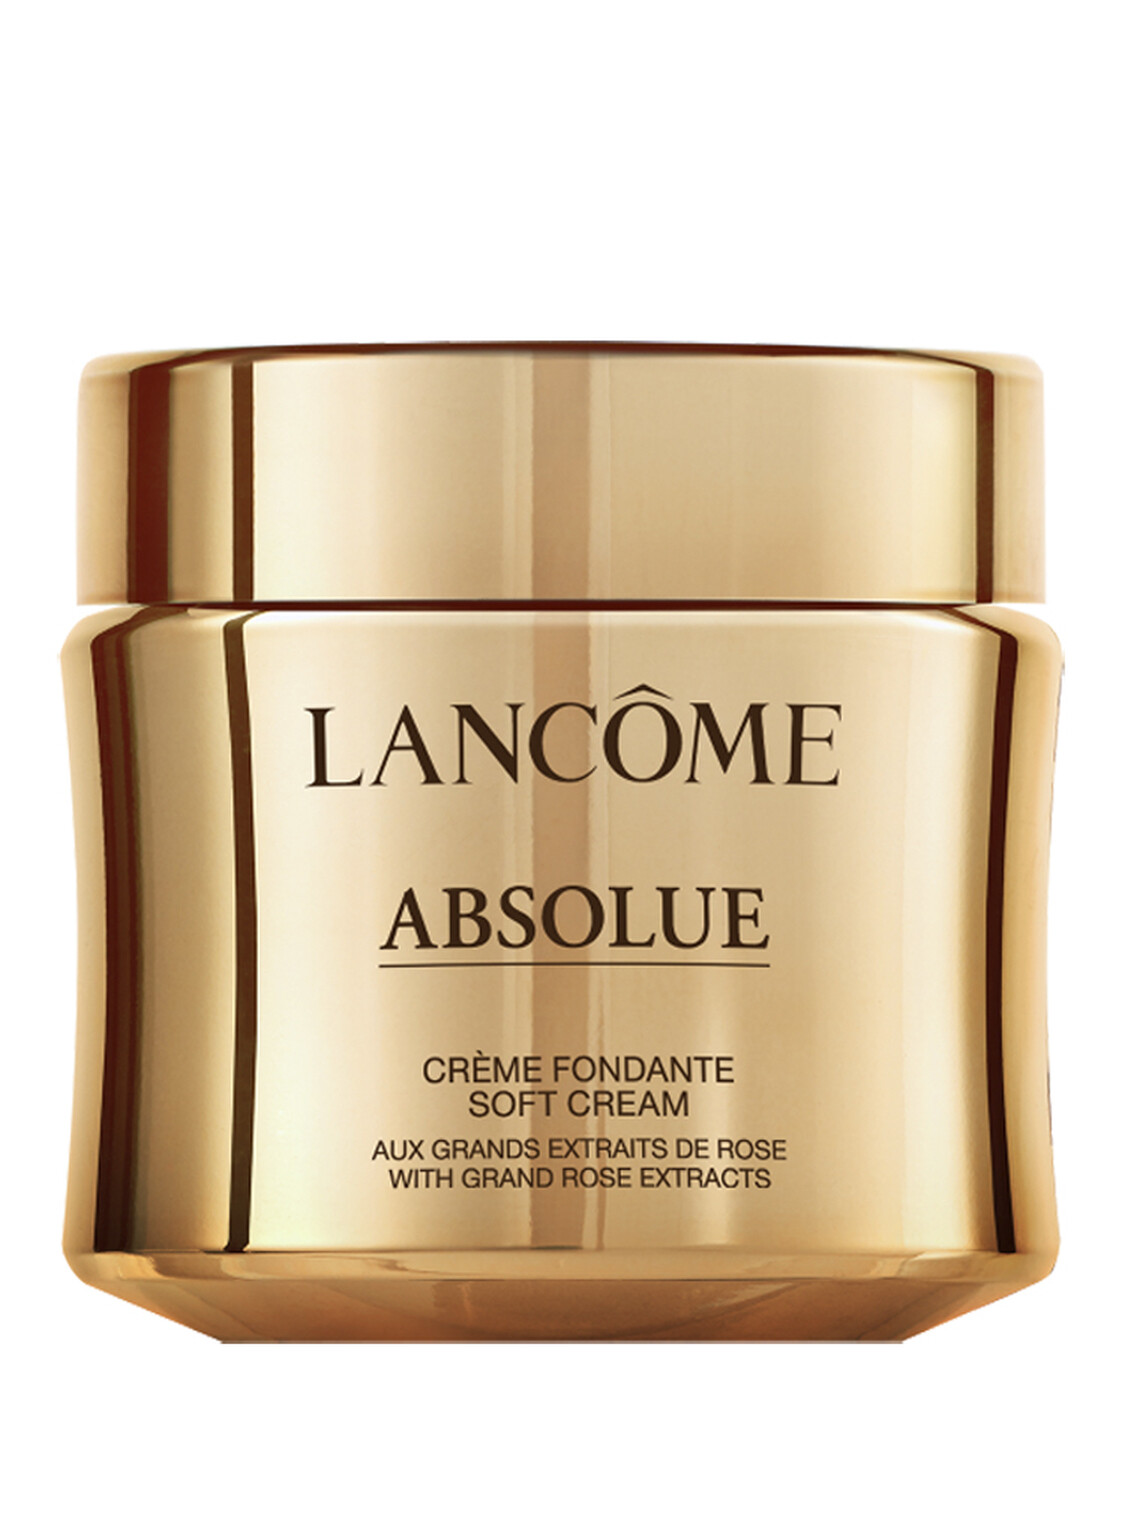 Tagescreme Lancôme Absolue Soft Cream 60ml kaufen